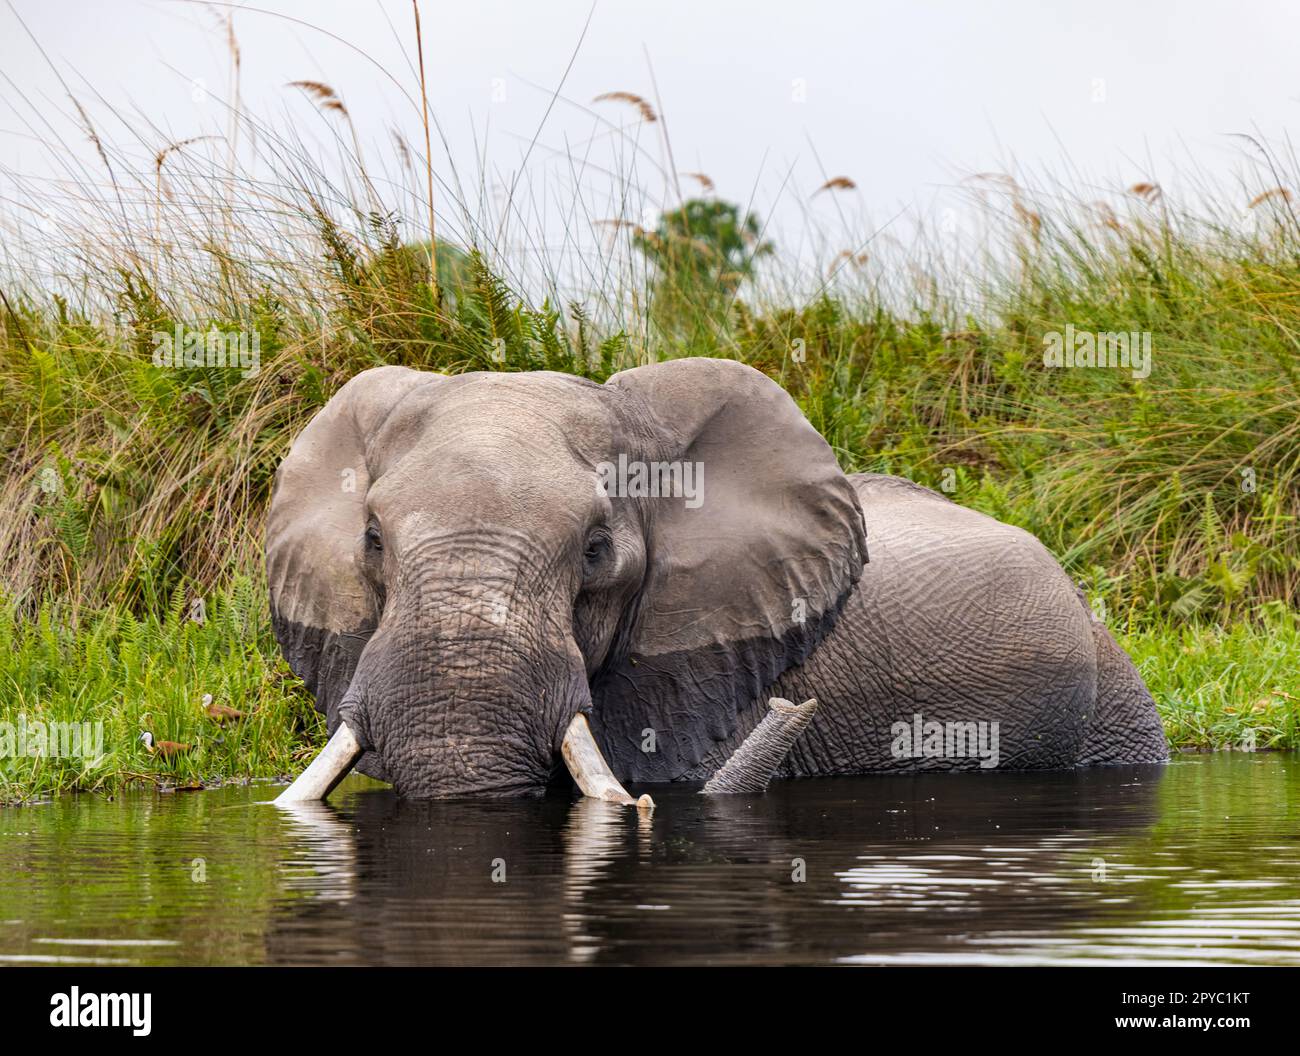 Ein afrikanischer Elefant (Loxodonta africana), der in Flussgewässern badet, Okavanga Delta, Botsuana, Afrika Stockfoto